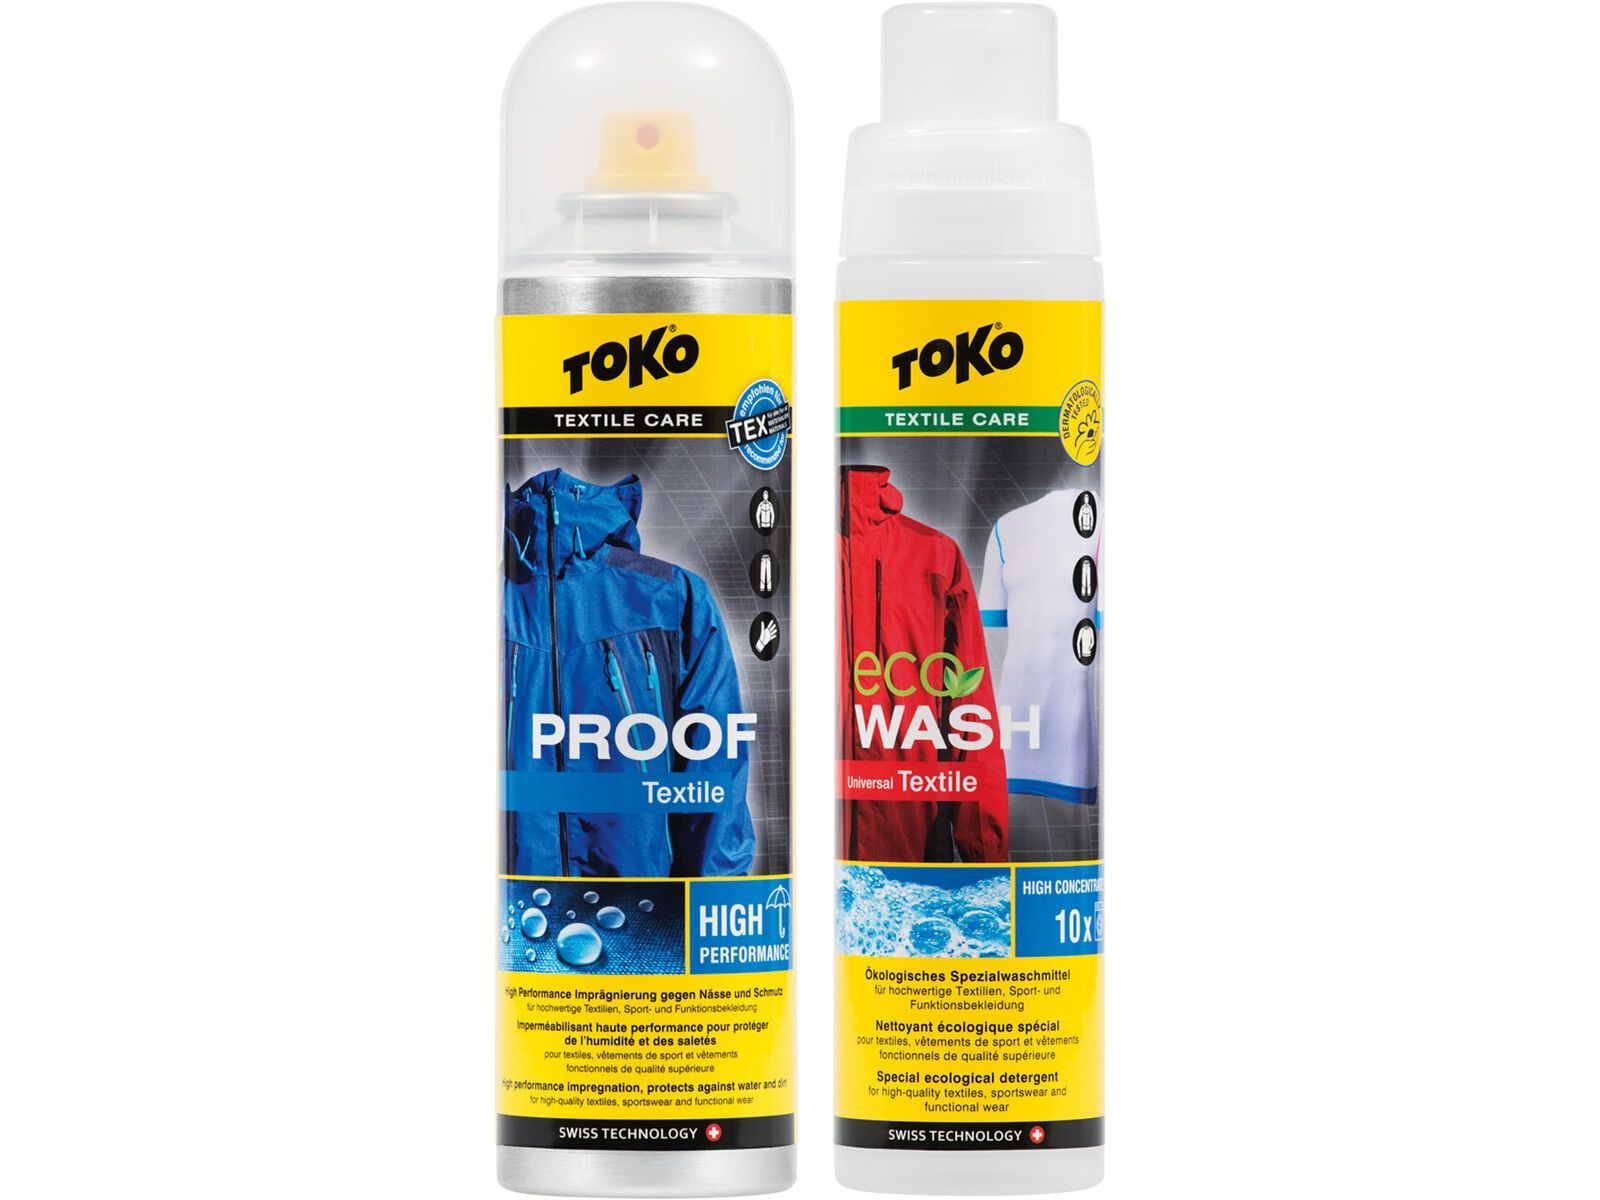 Toko Textile Proof + Eco Textile Wash / Duo-Pack - 2x 250 ml | Bild 1